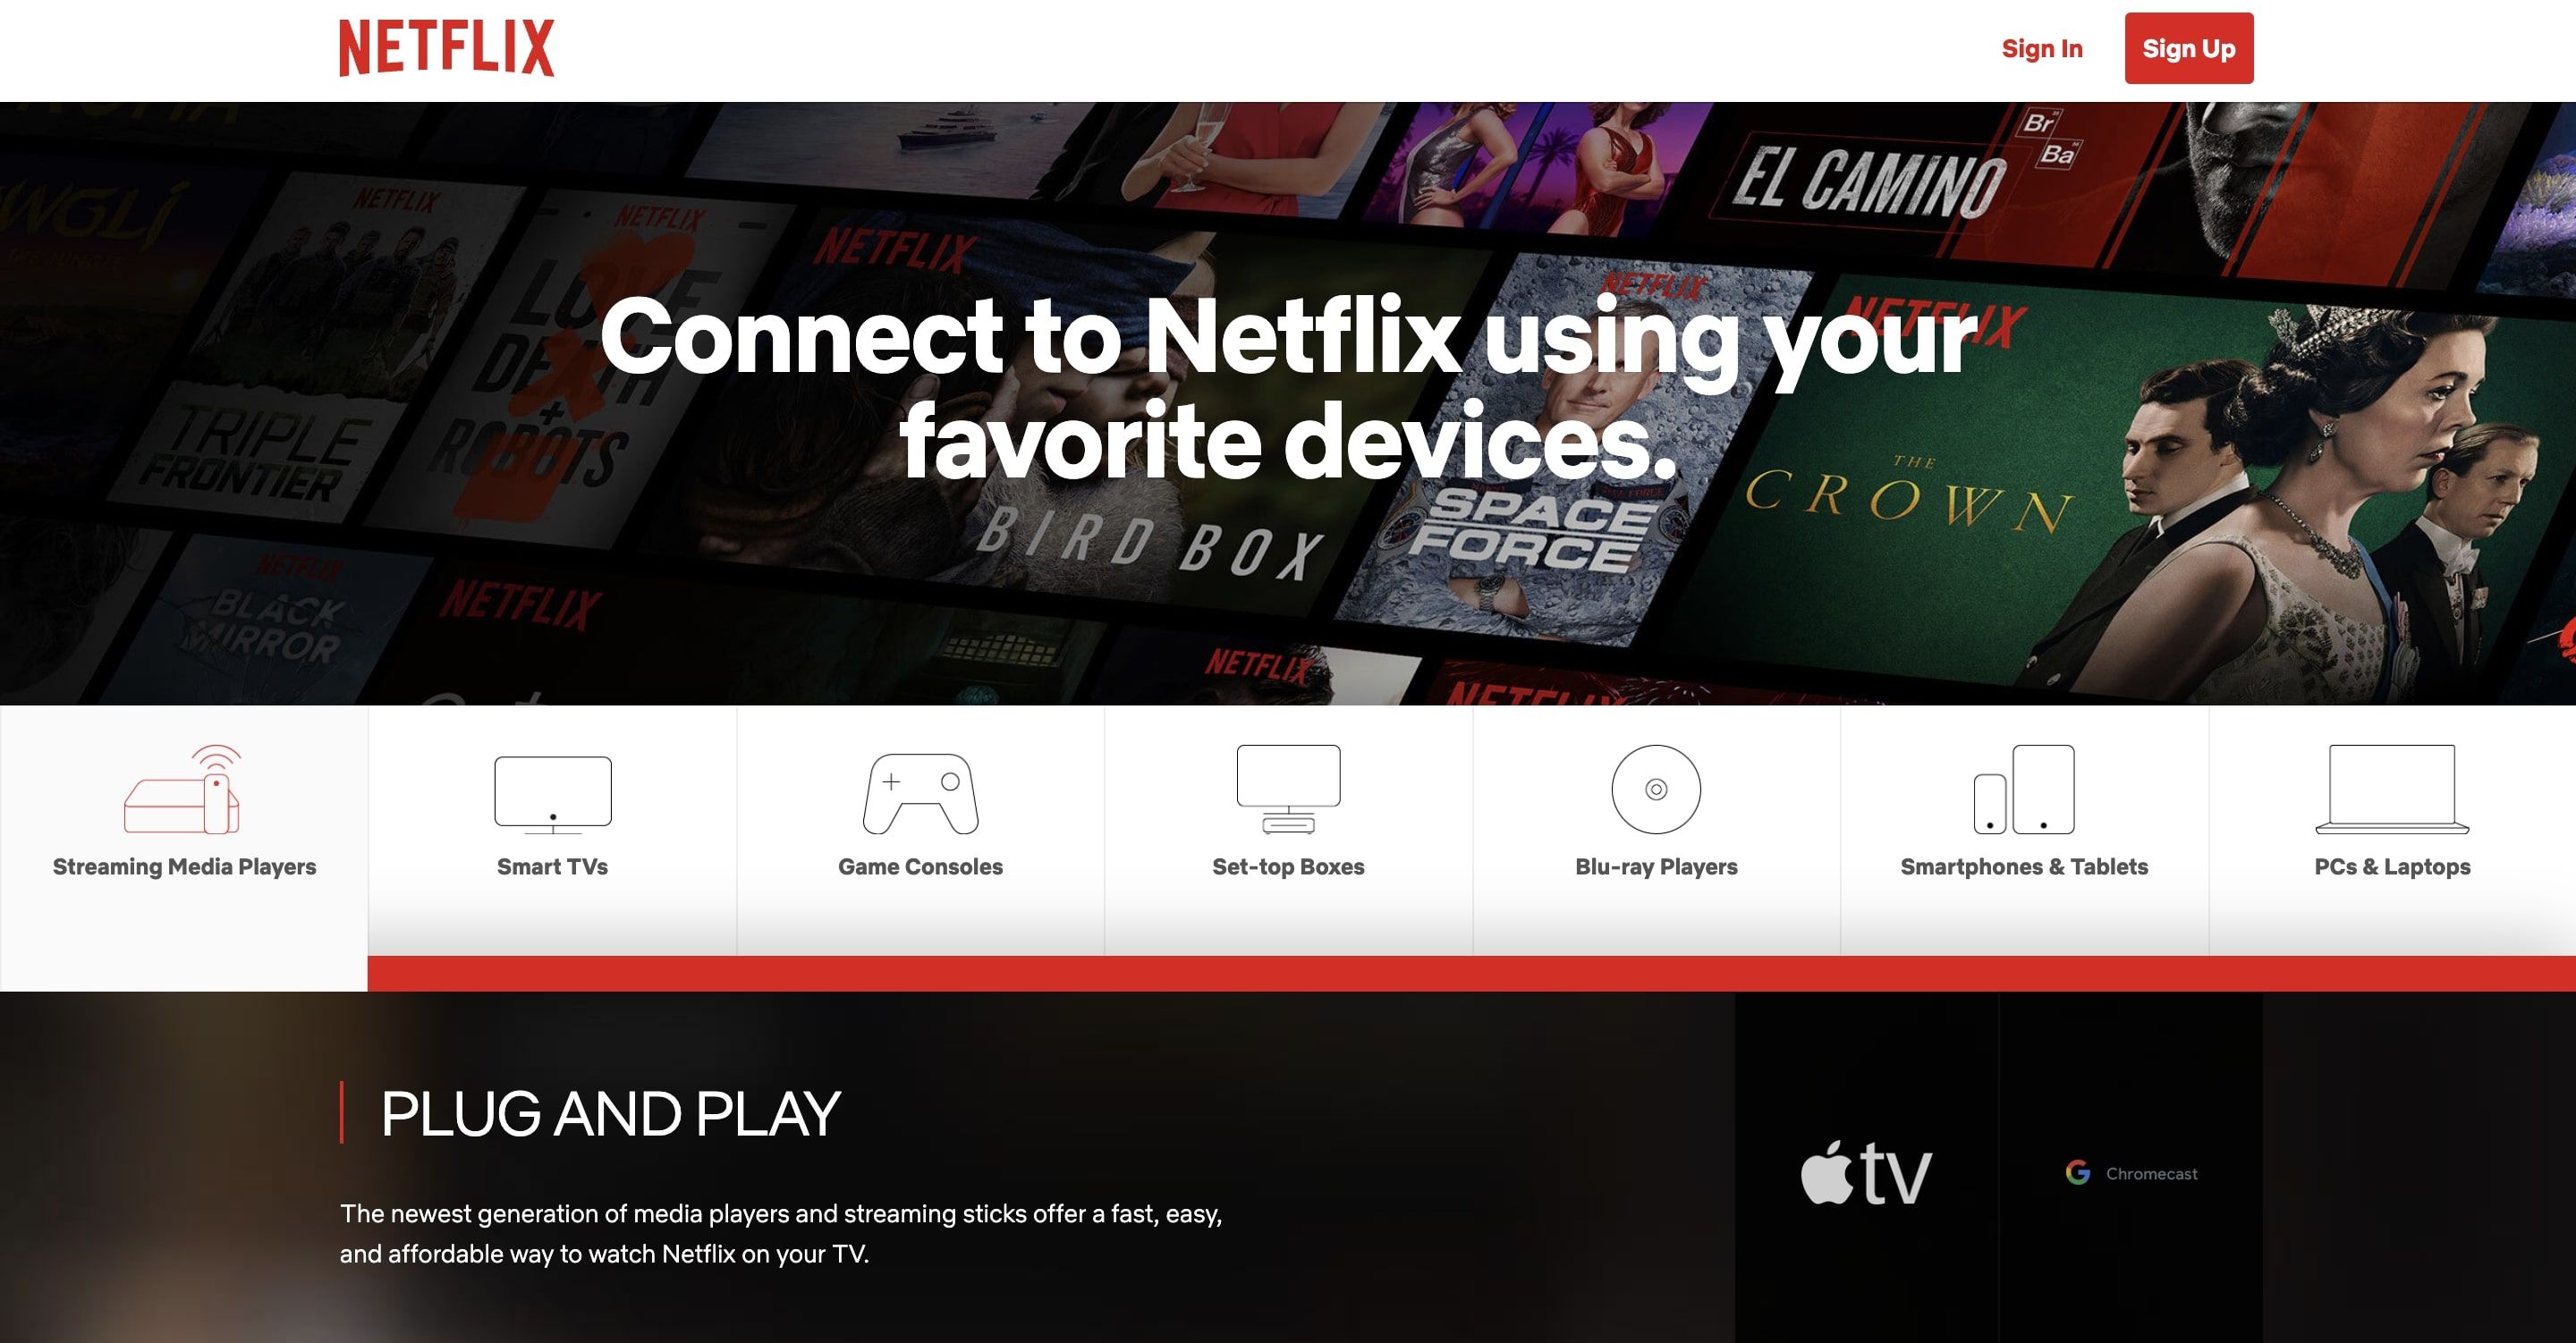 Netflix devices availability